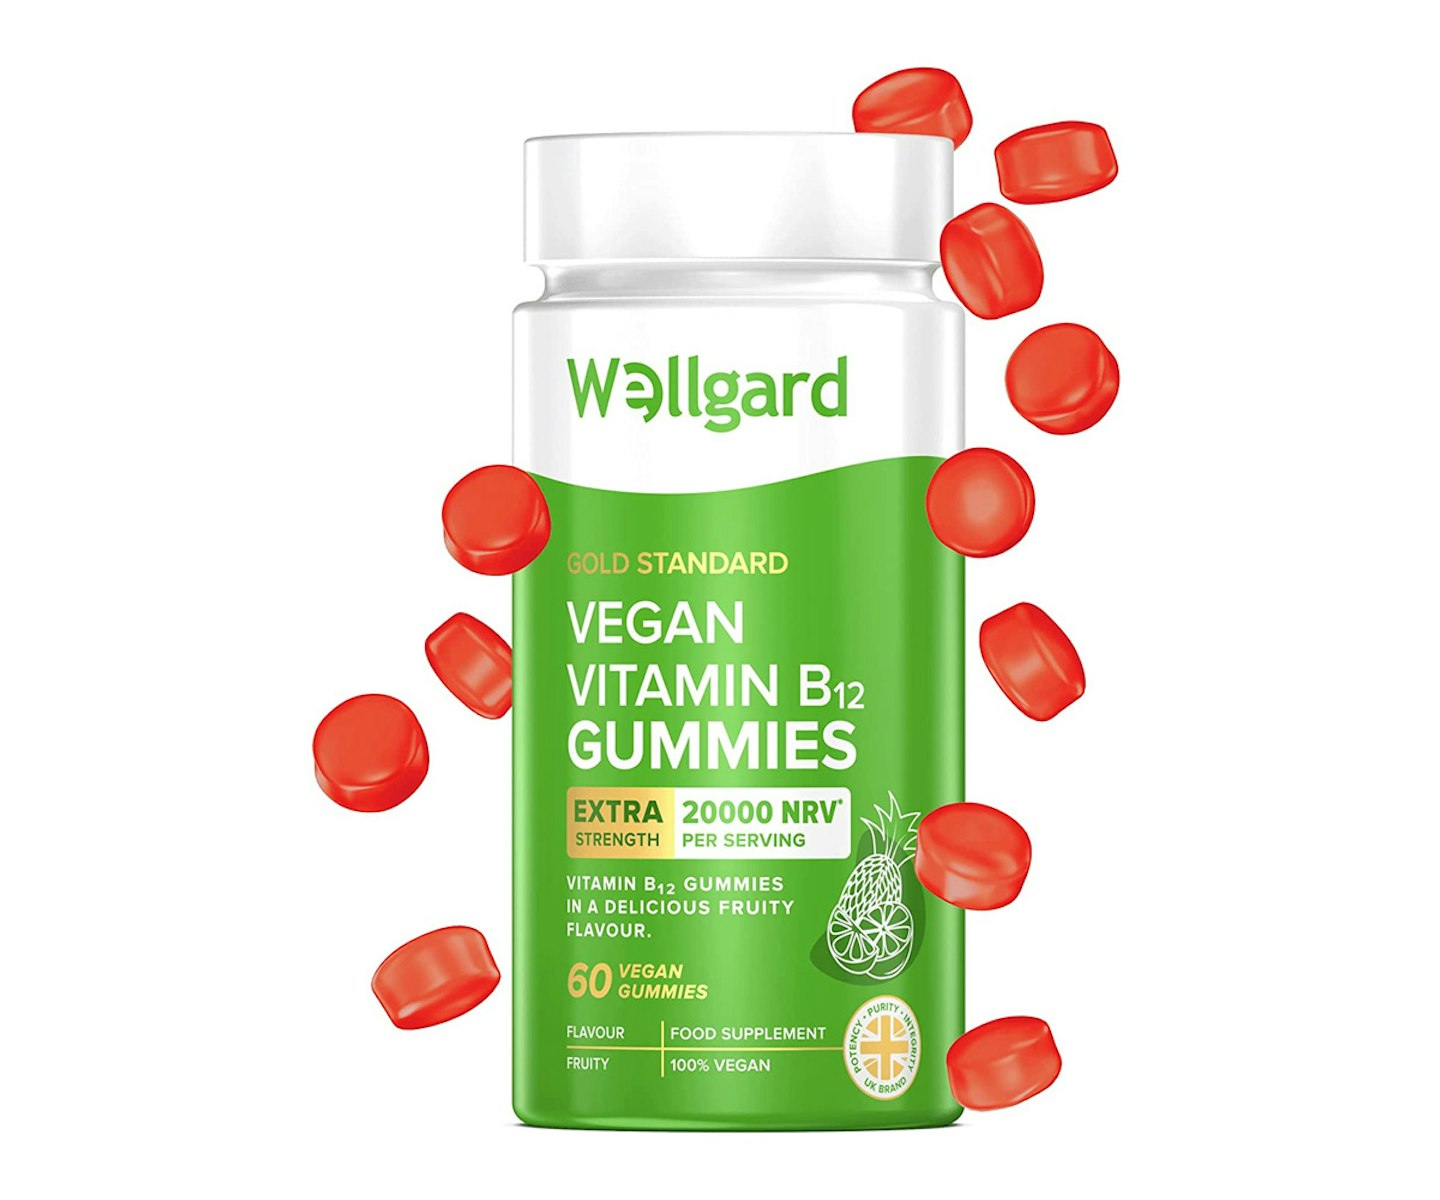 Vegan Vitamin B12 Gummies Wellgard